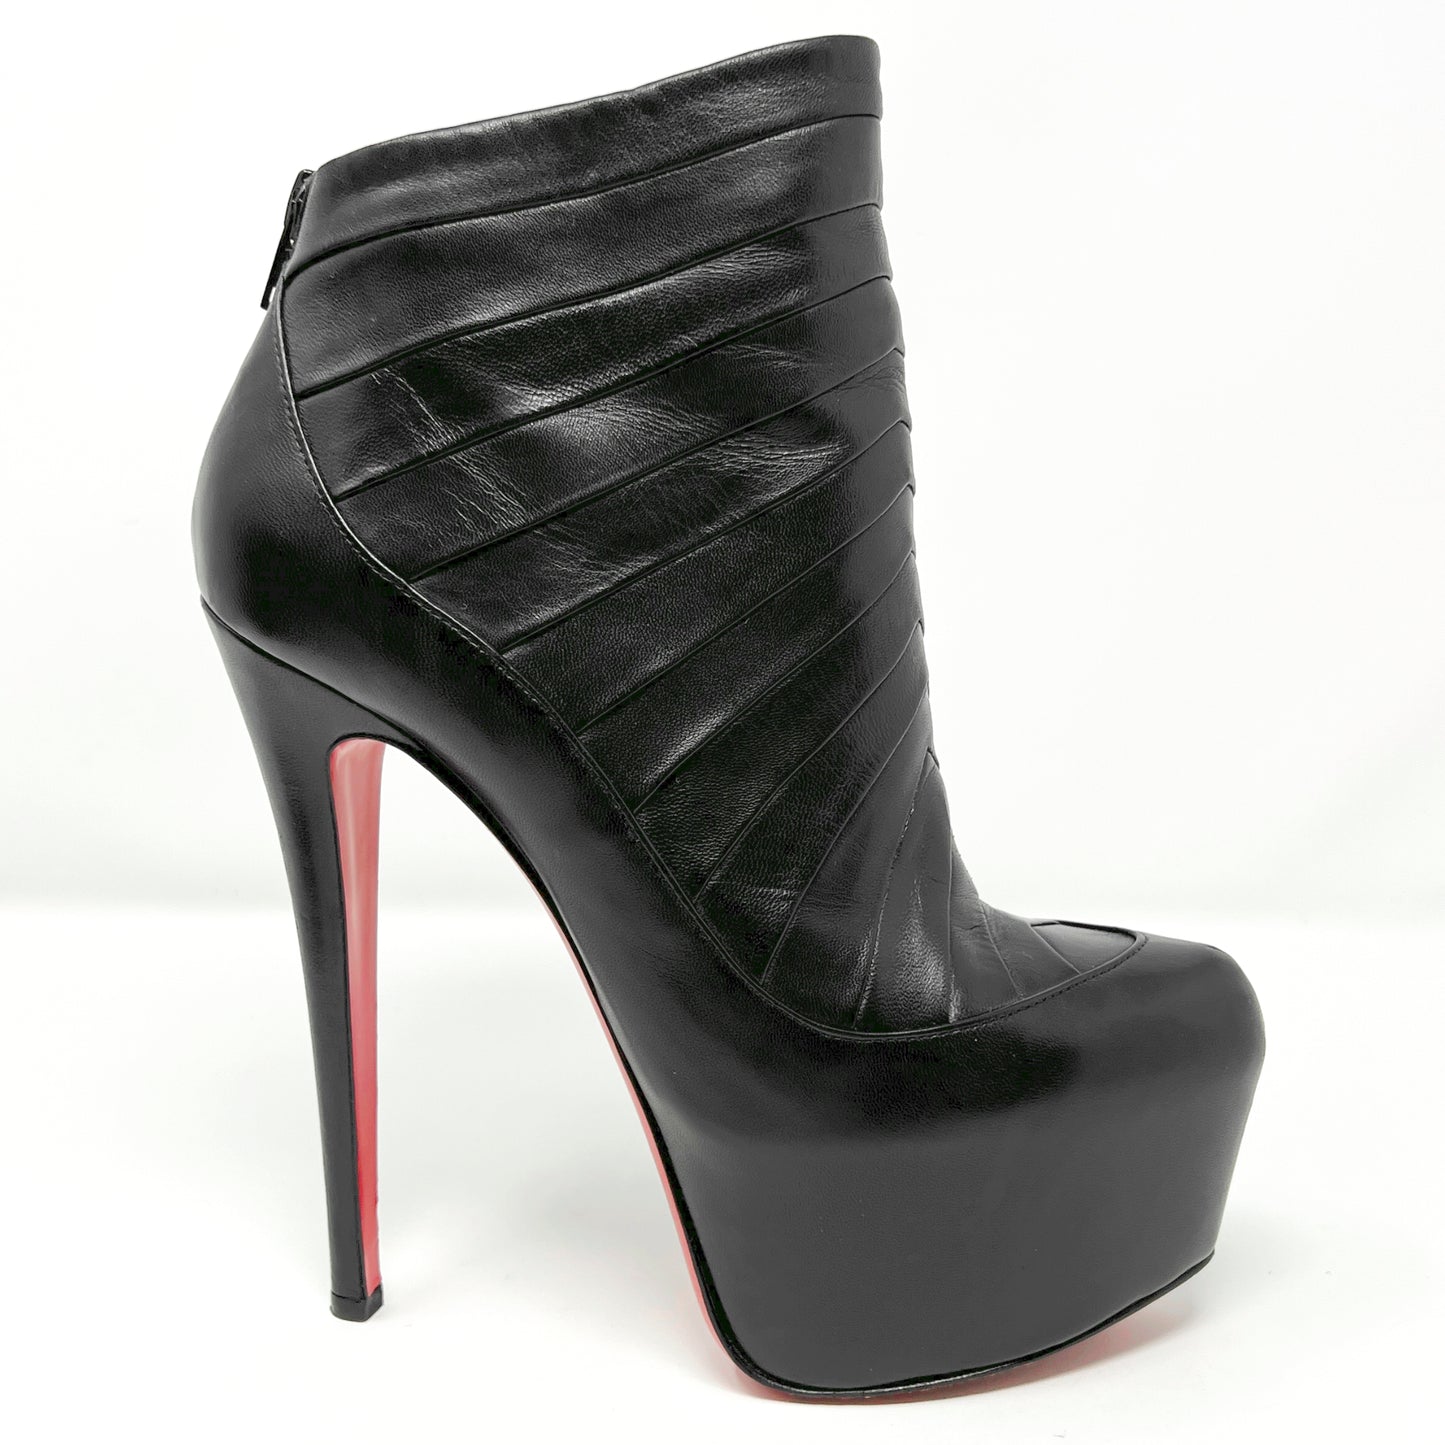 Christian Louboutin Amor 160 Black Leather Platform High Heels Ankle Boots Size EU 37.5